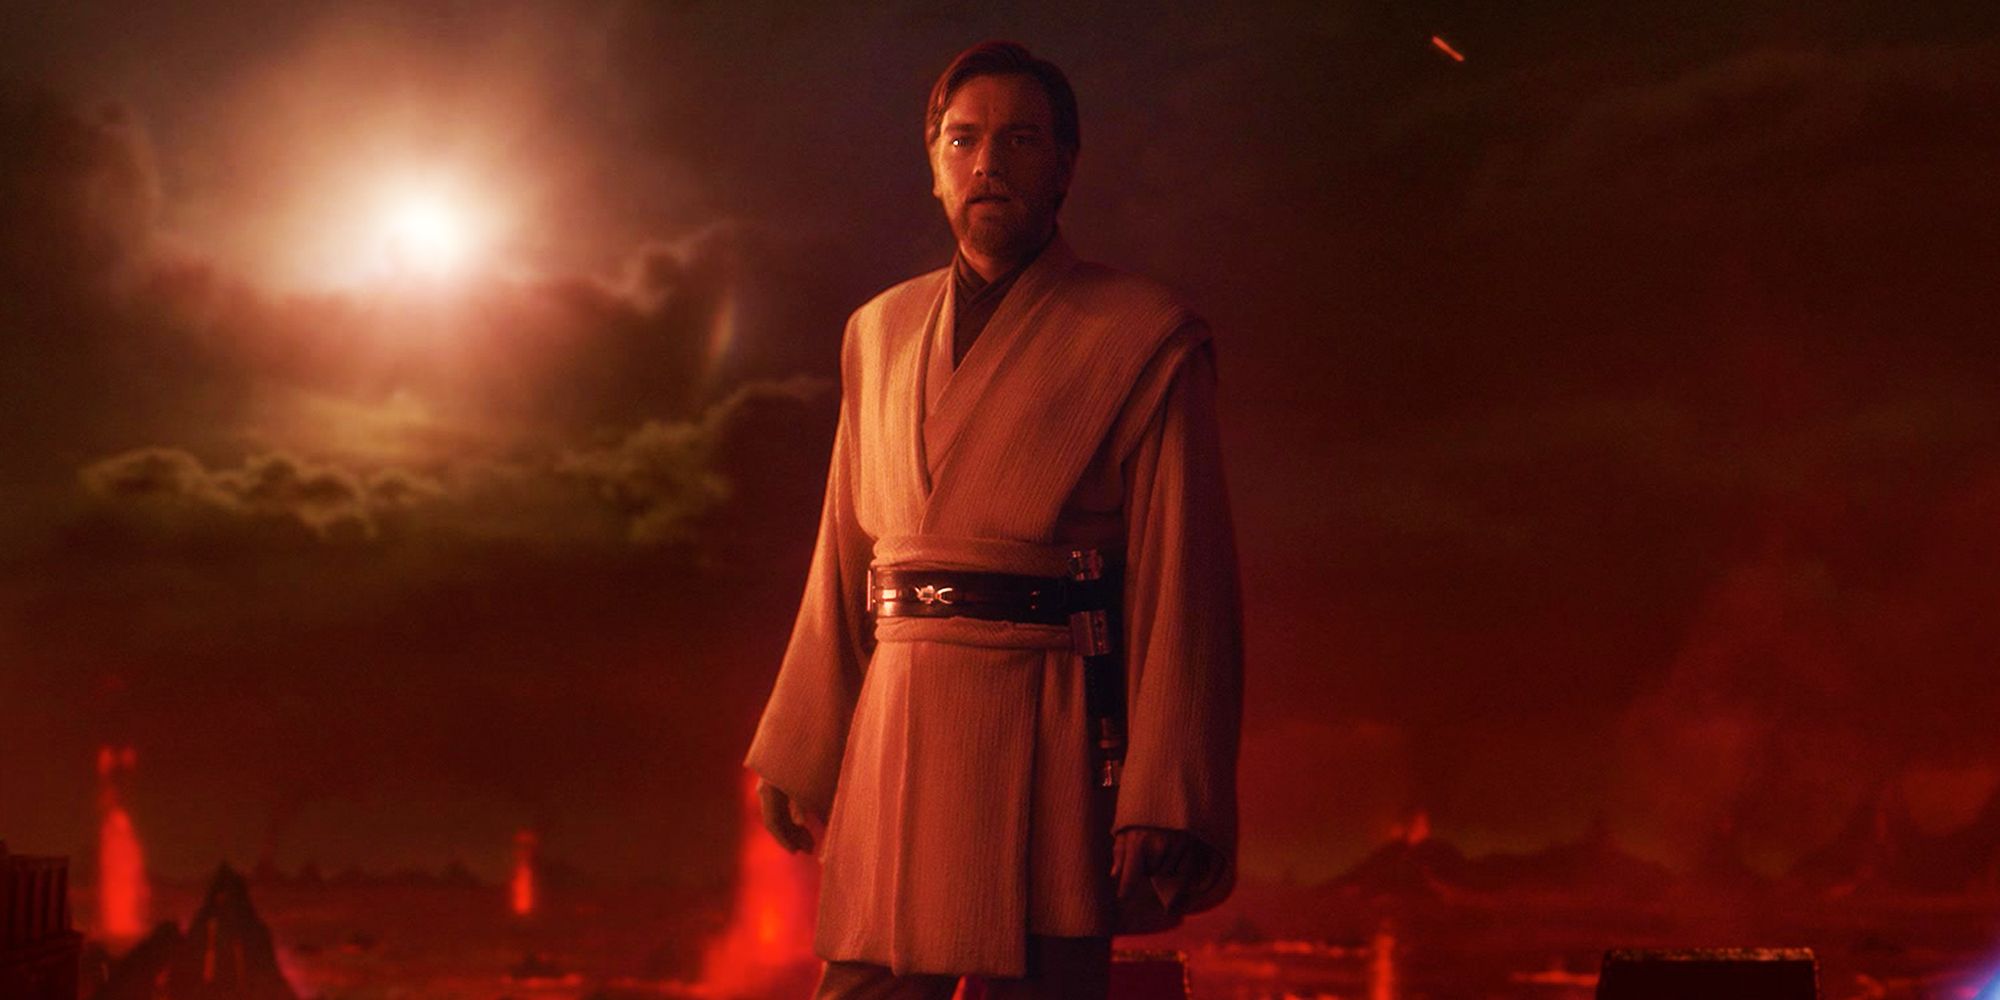 Ewan McGregor's Obi-Wan Kenobi reflects on Anakin using an absolute like a Sith, looking serious on Mustafar